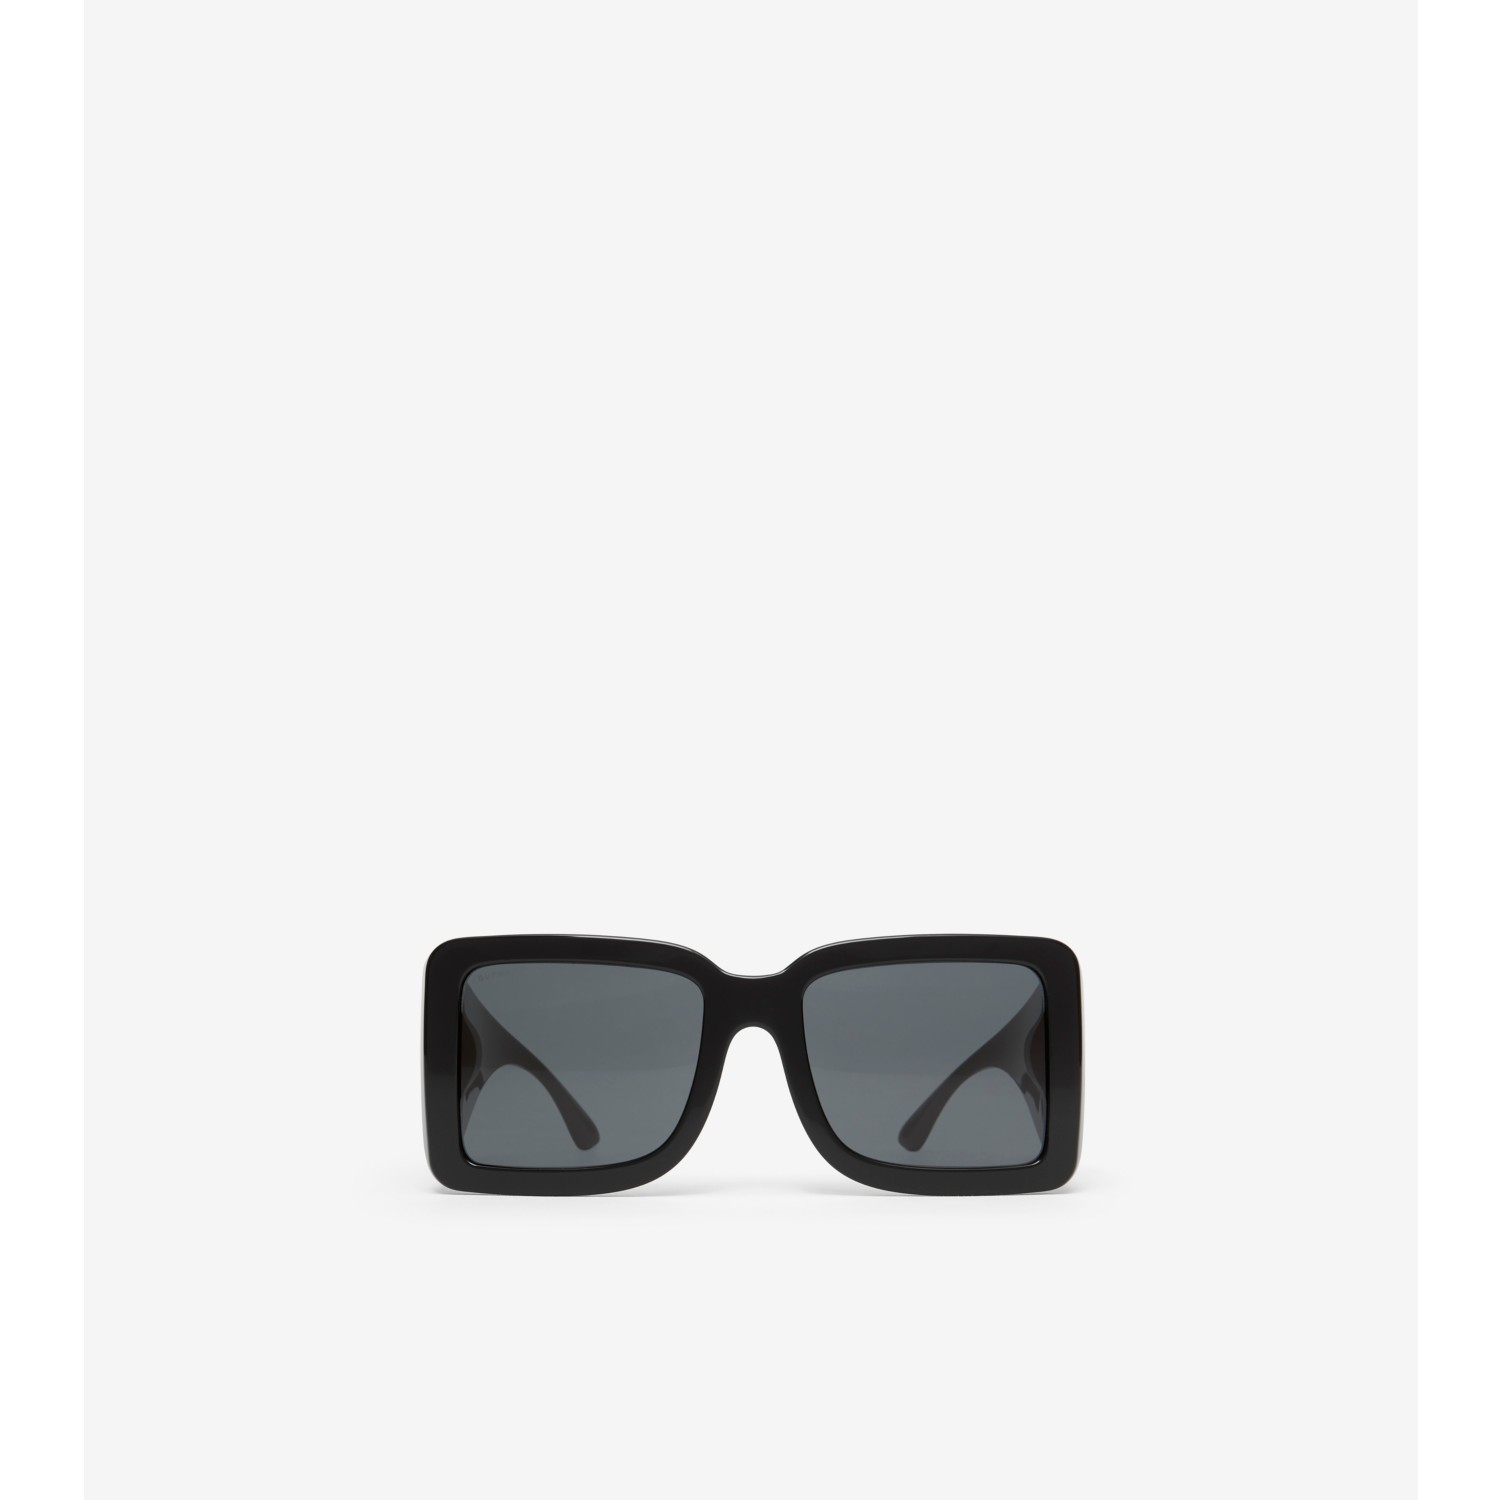 SUNBSR Thick Frame Sunglasses for Women Men Retro Square Black Sun Glasses Fashion Chunky Rectangle Shades